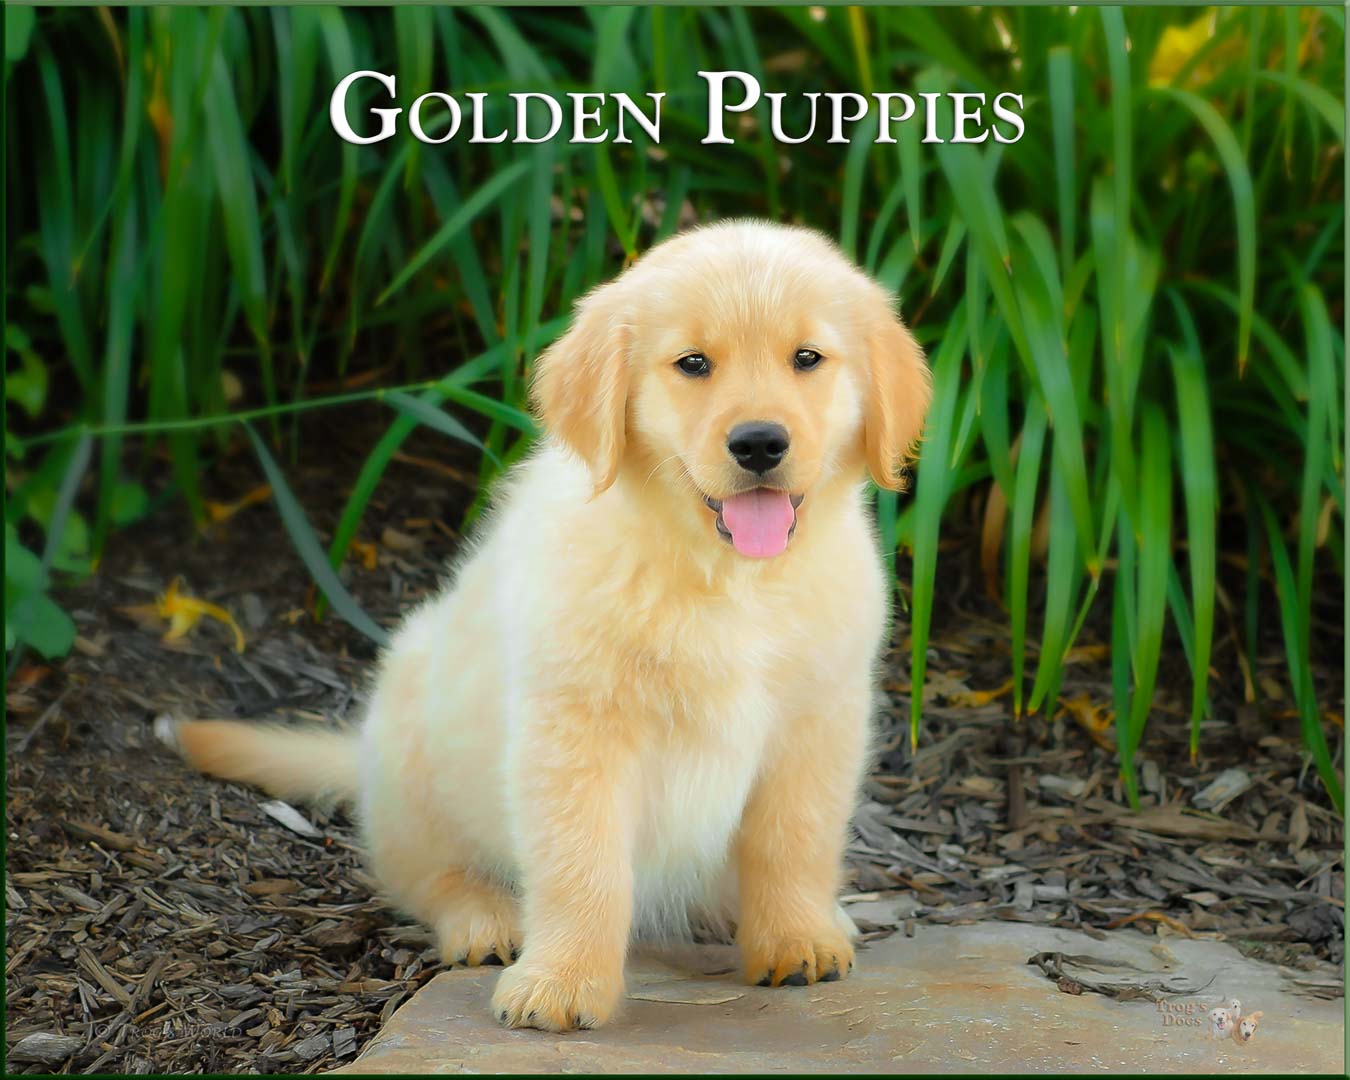 Golden Retriever Puppy sitting on a rock